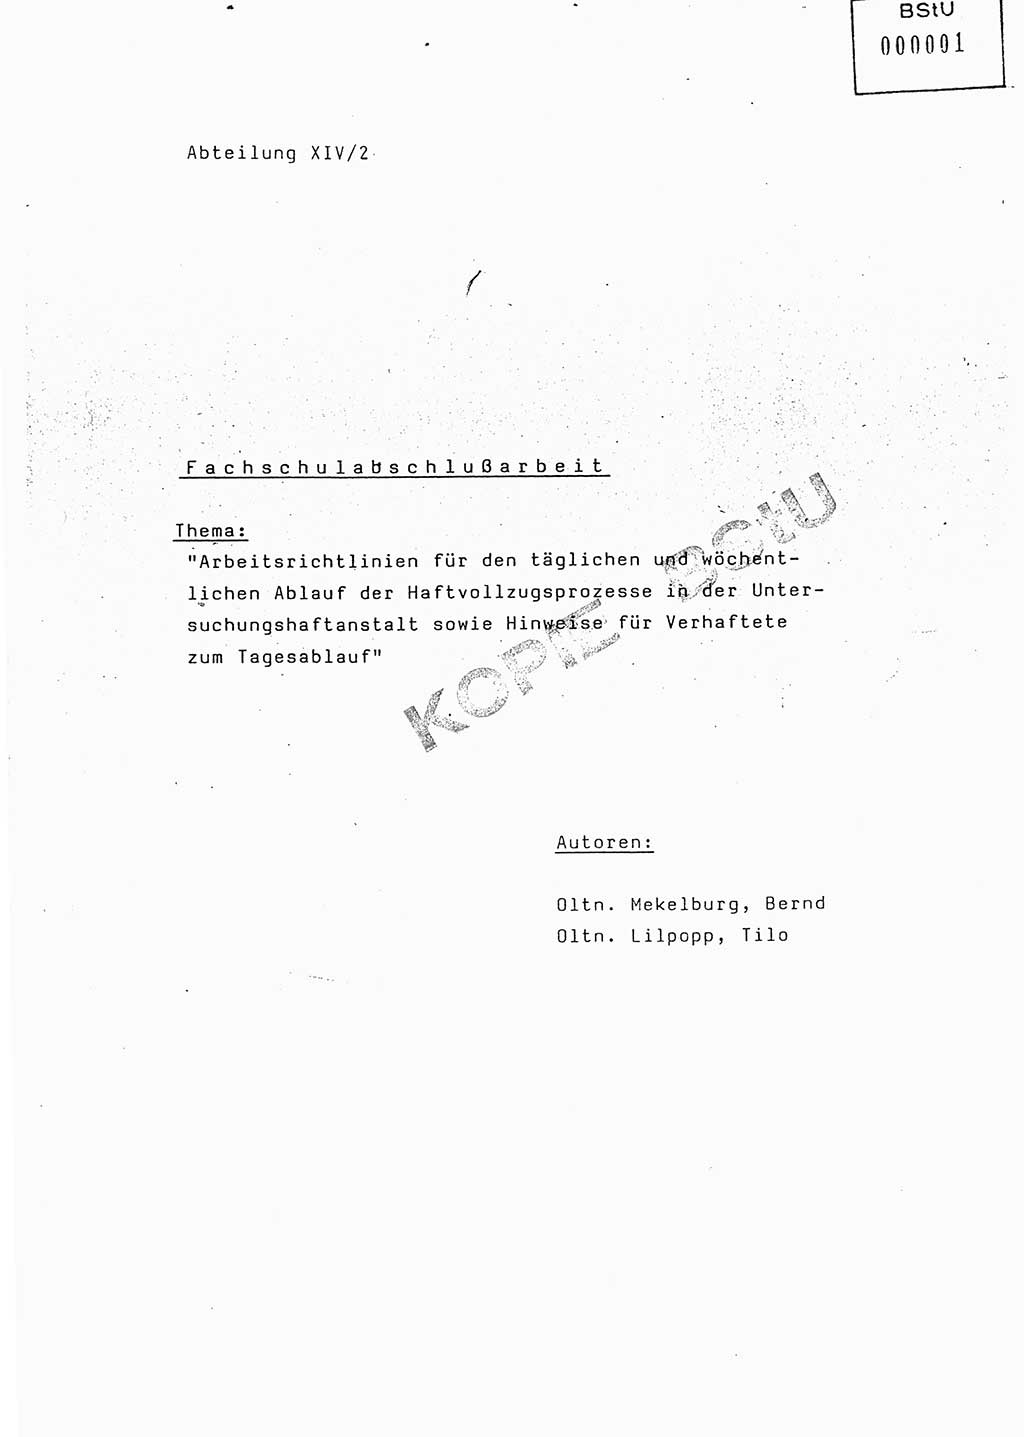 Fachschulabschlußarbeit Oberleutnant Bernd Mekelburg (Abt. ⅩⅣ/2), Oberleutnant Tilo Lilpopp (Abt. ⅩⅣ/2), Ministerium für Staatssicherheit (MfS) [Deutsche Demokratische Republik (DDR)], Abteilung ⅩⅣ, o.D., o.O, o.J., ca. 1986 wg. Bez. DA 1/86, Seite 1 (FS-Abschl.-Arb. MfS DDR Abt. ⅩⅣ 1986, S. 1)